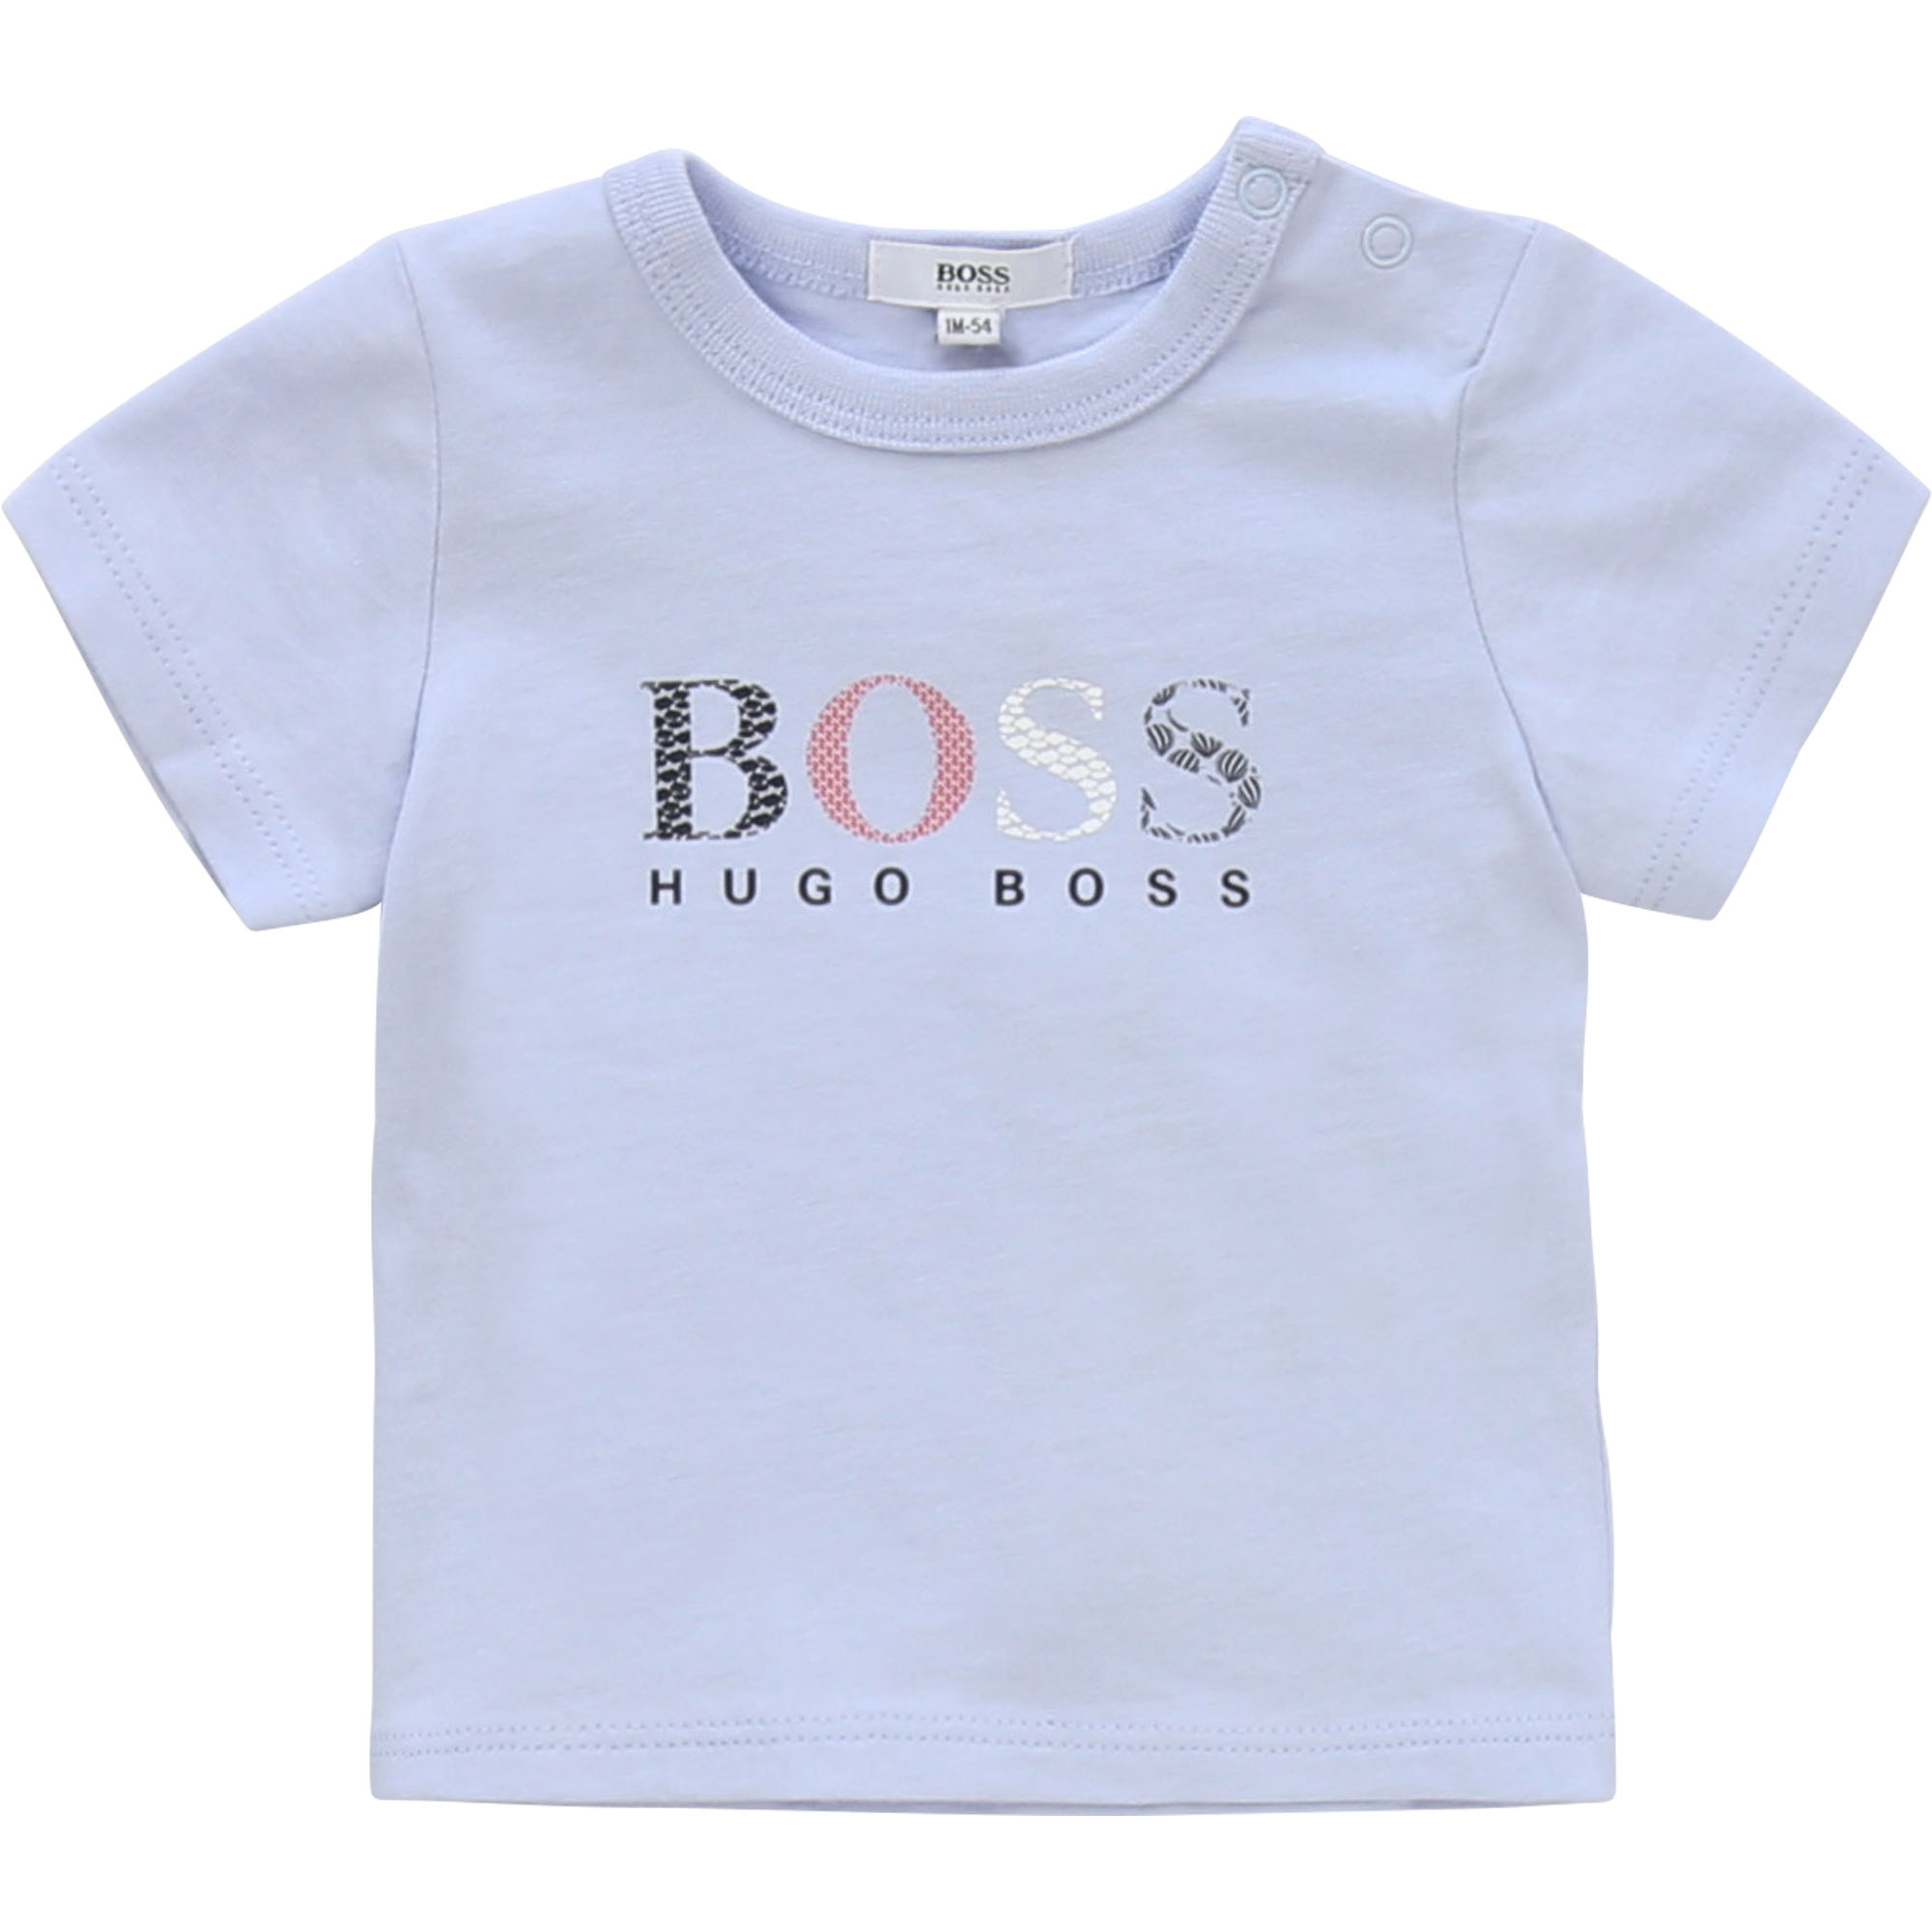 hugo boss baby clothes